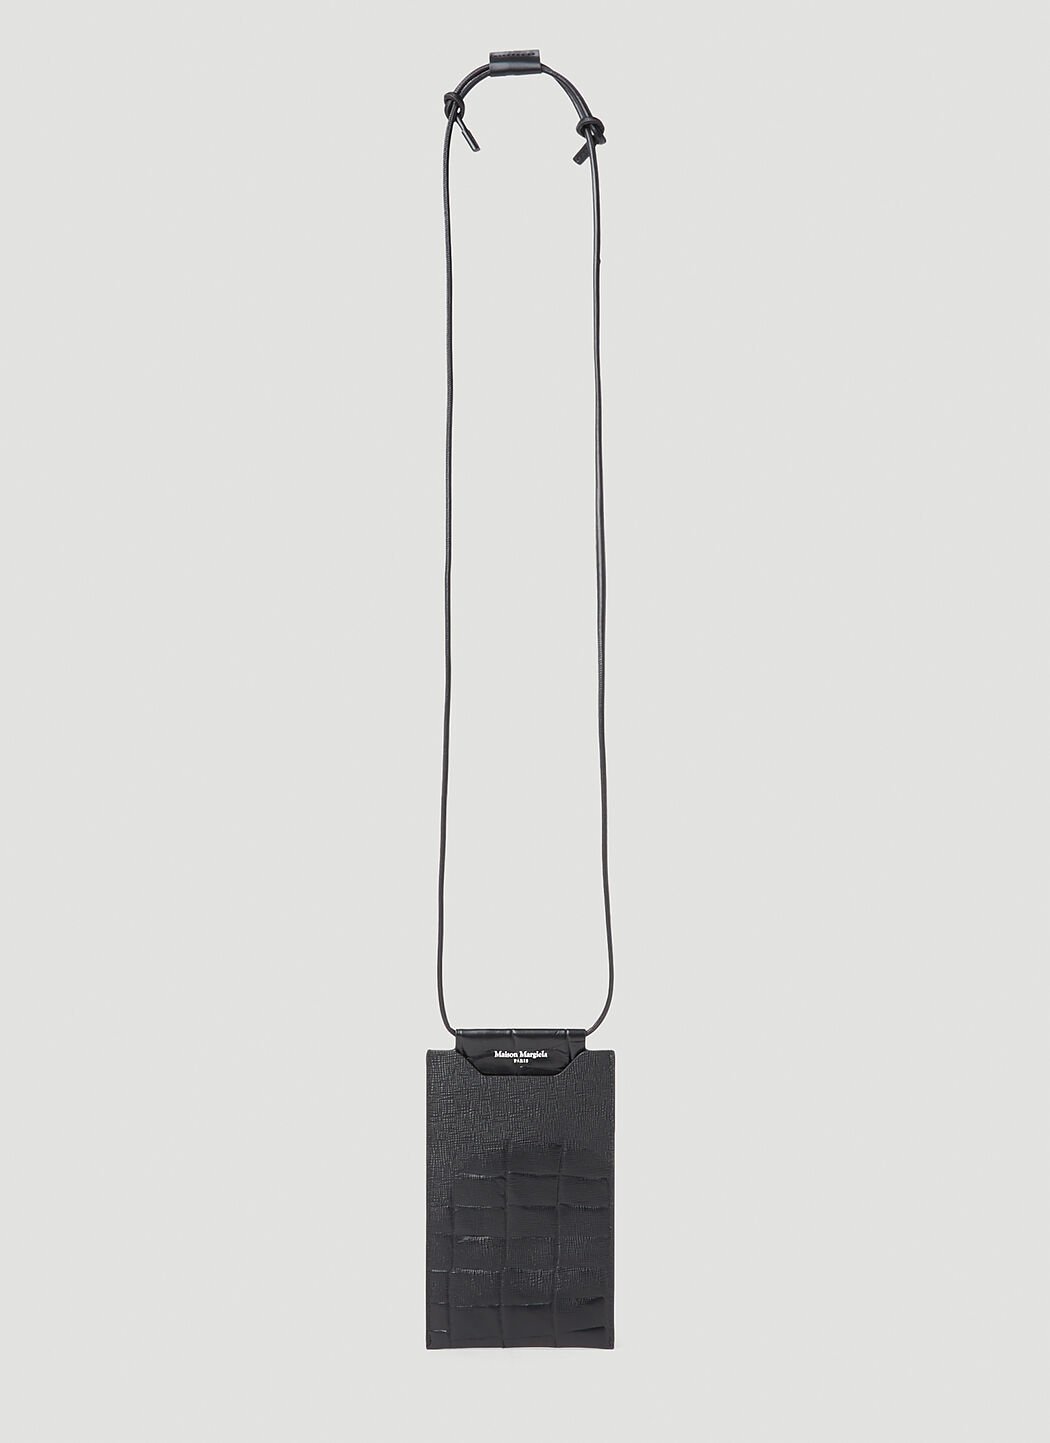 Jil Sander+ 鳄鱼纹压花皮革手机袋 黑色 jsp0151016